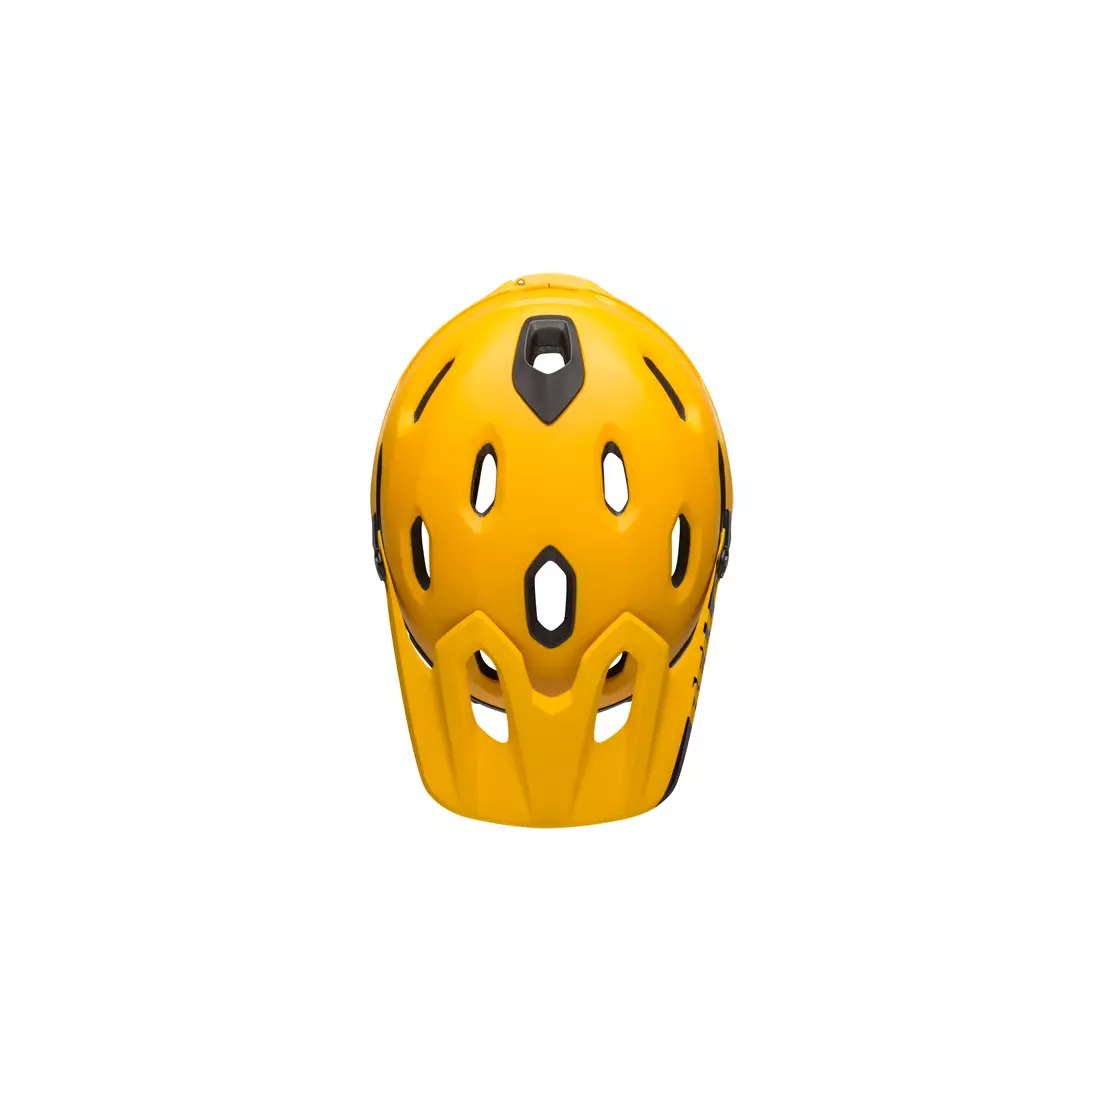 BELL SUPER DH MIPS SPHERICAL cască integrală pentru bicicletă, matte gloss yellow black